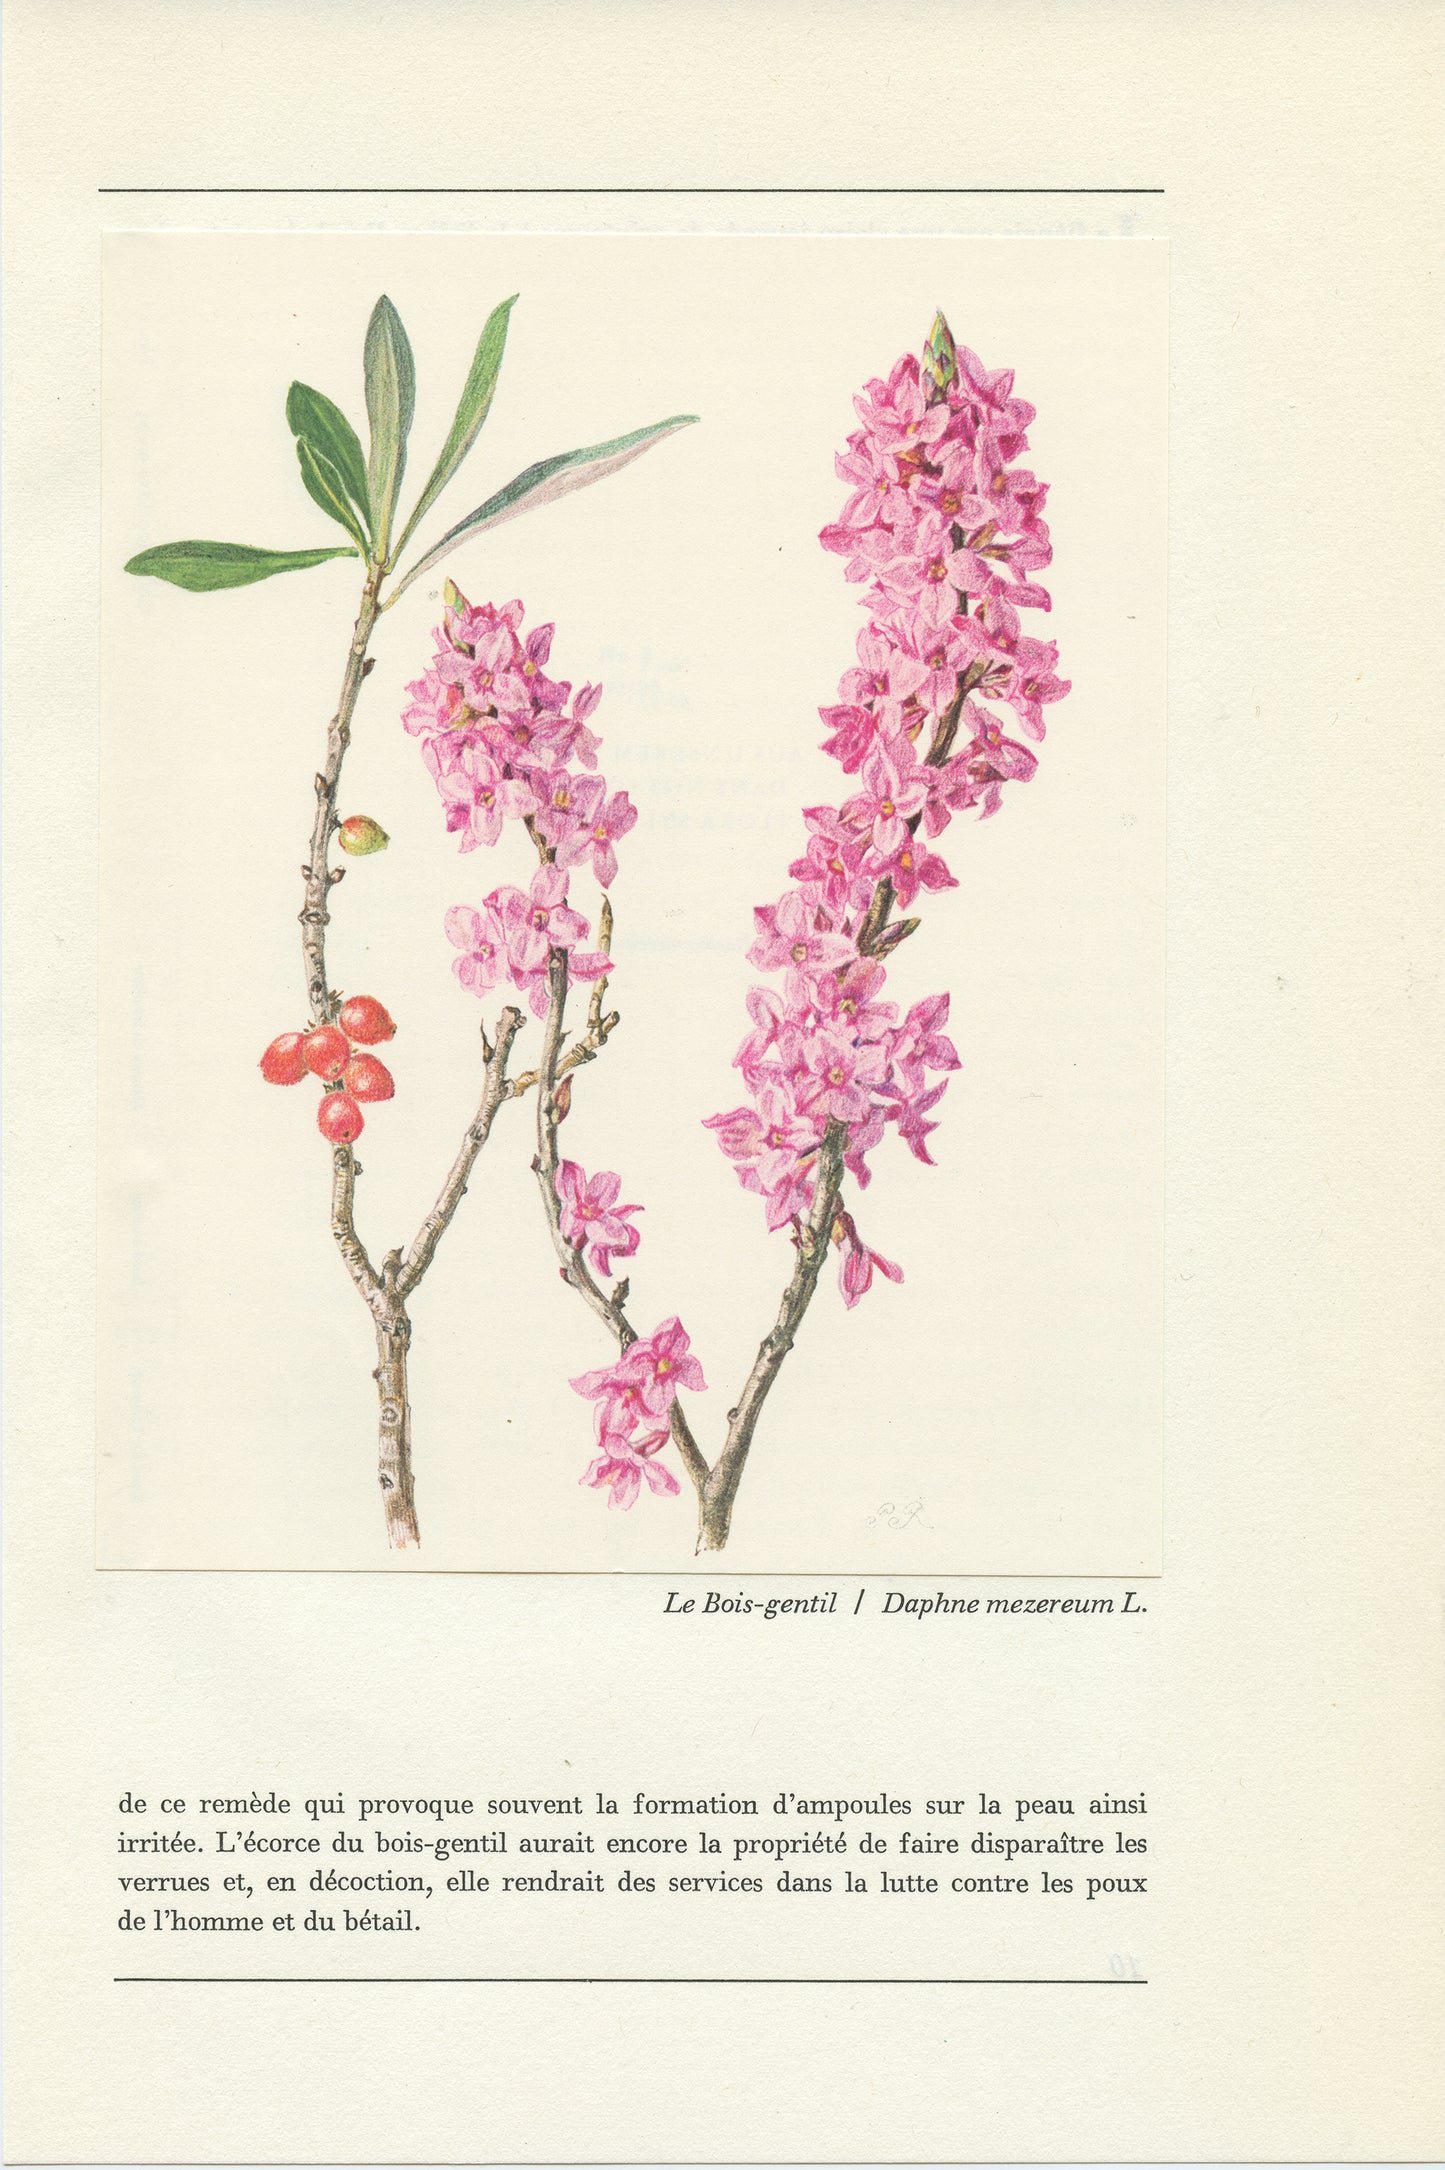 1959 Spurge laurel Daphne Mezereum botanical print